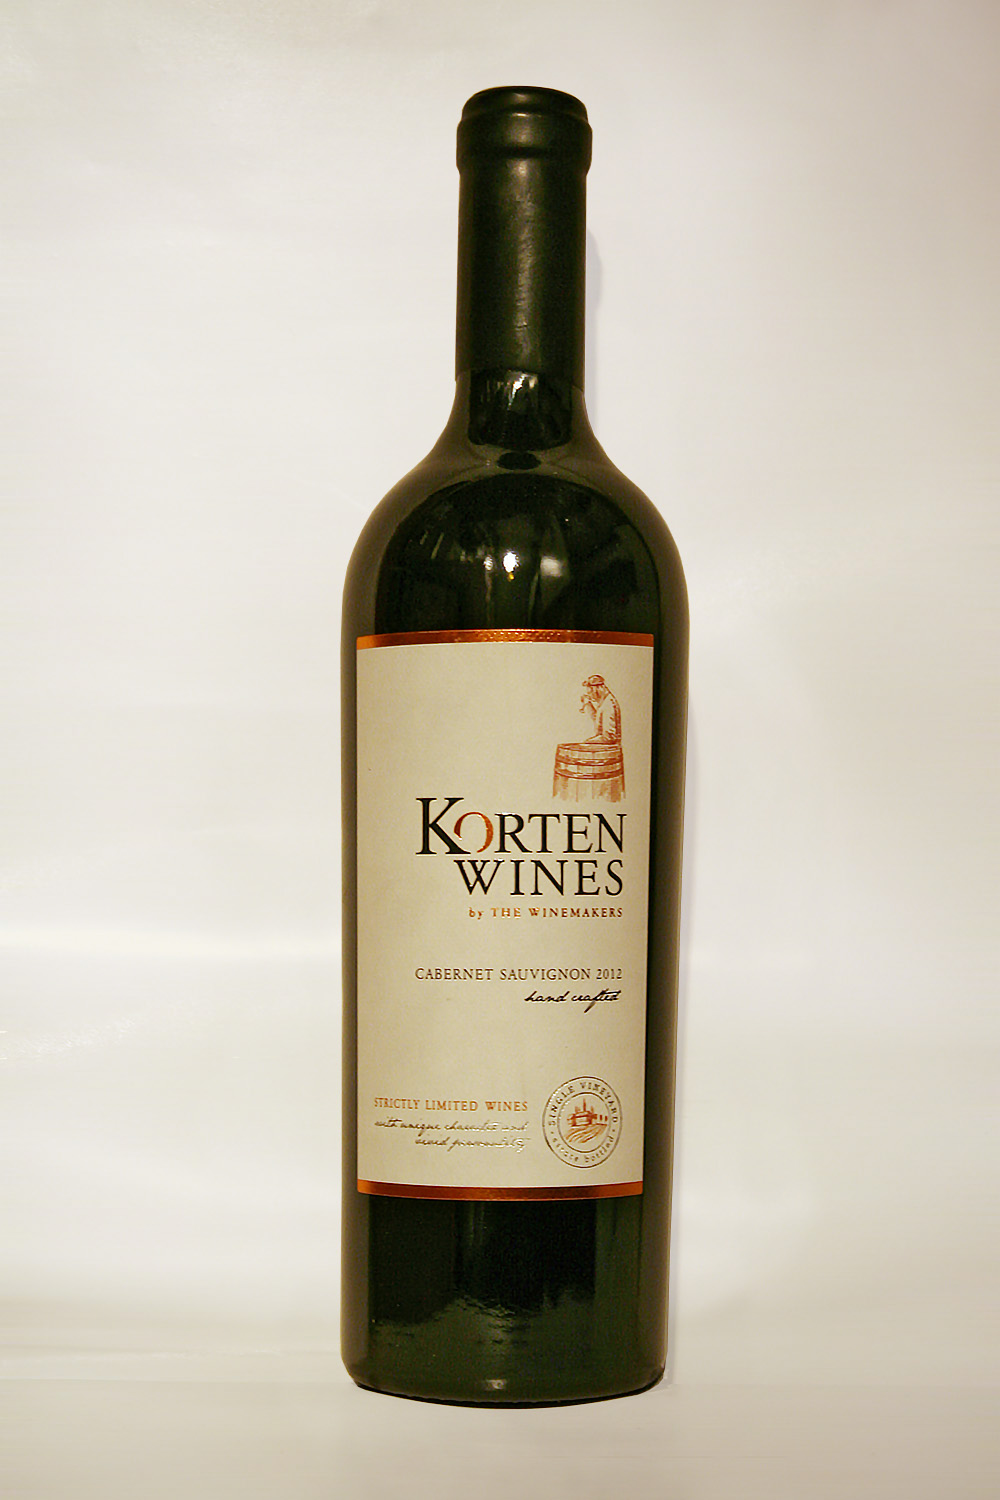 Korten Wines Cabernet Sauvignon 2012